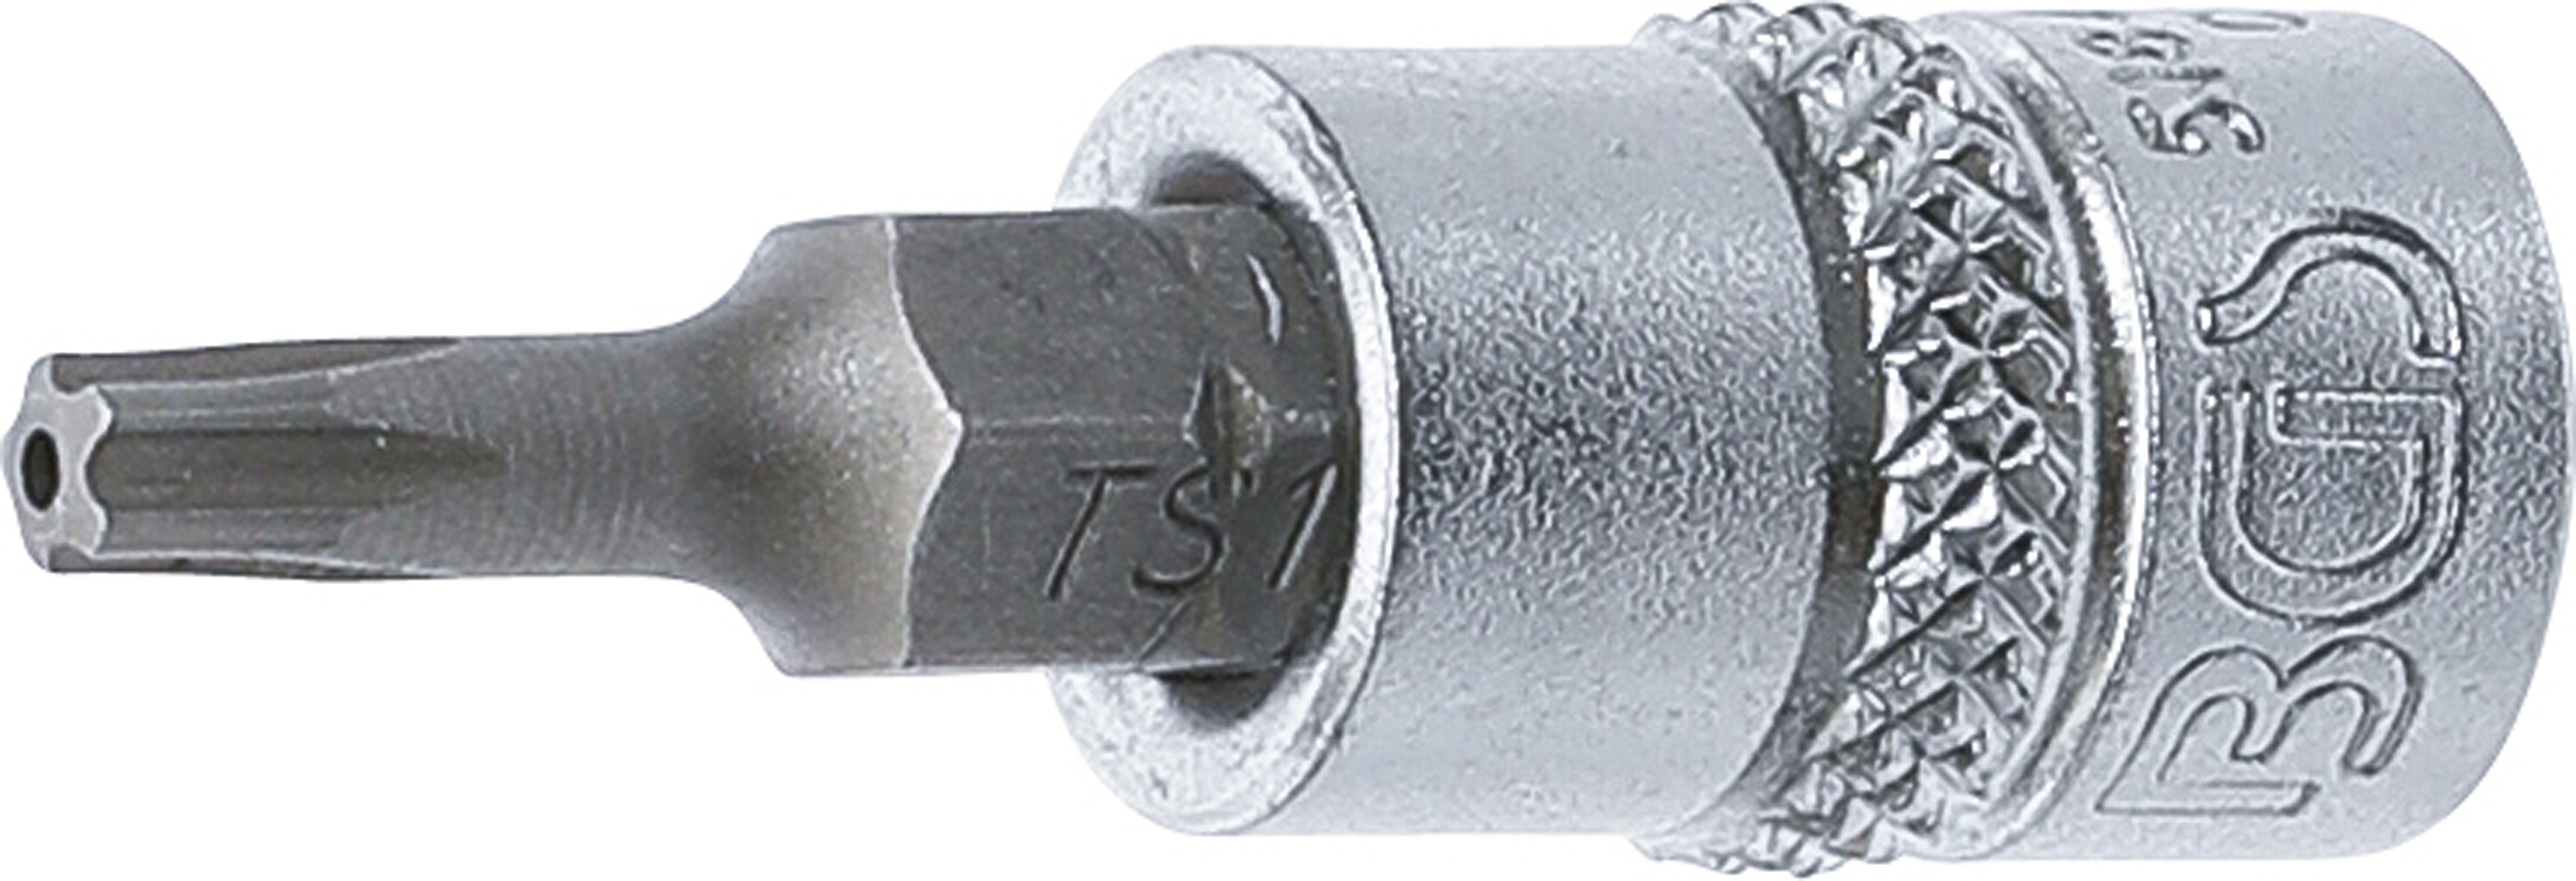 BGS Bit-Einsatz | Antrieb Innenvierkant 6,3 mm (1/4") | TS-Profil (für Torx Plus) mit Bohrung TS15